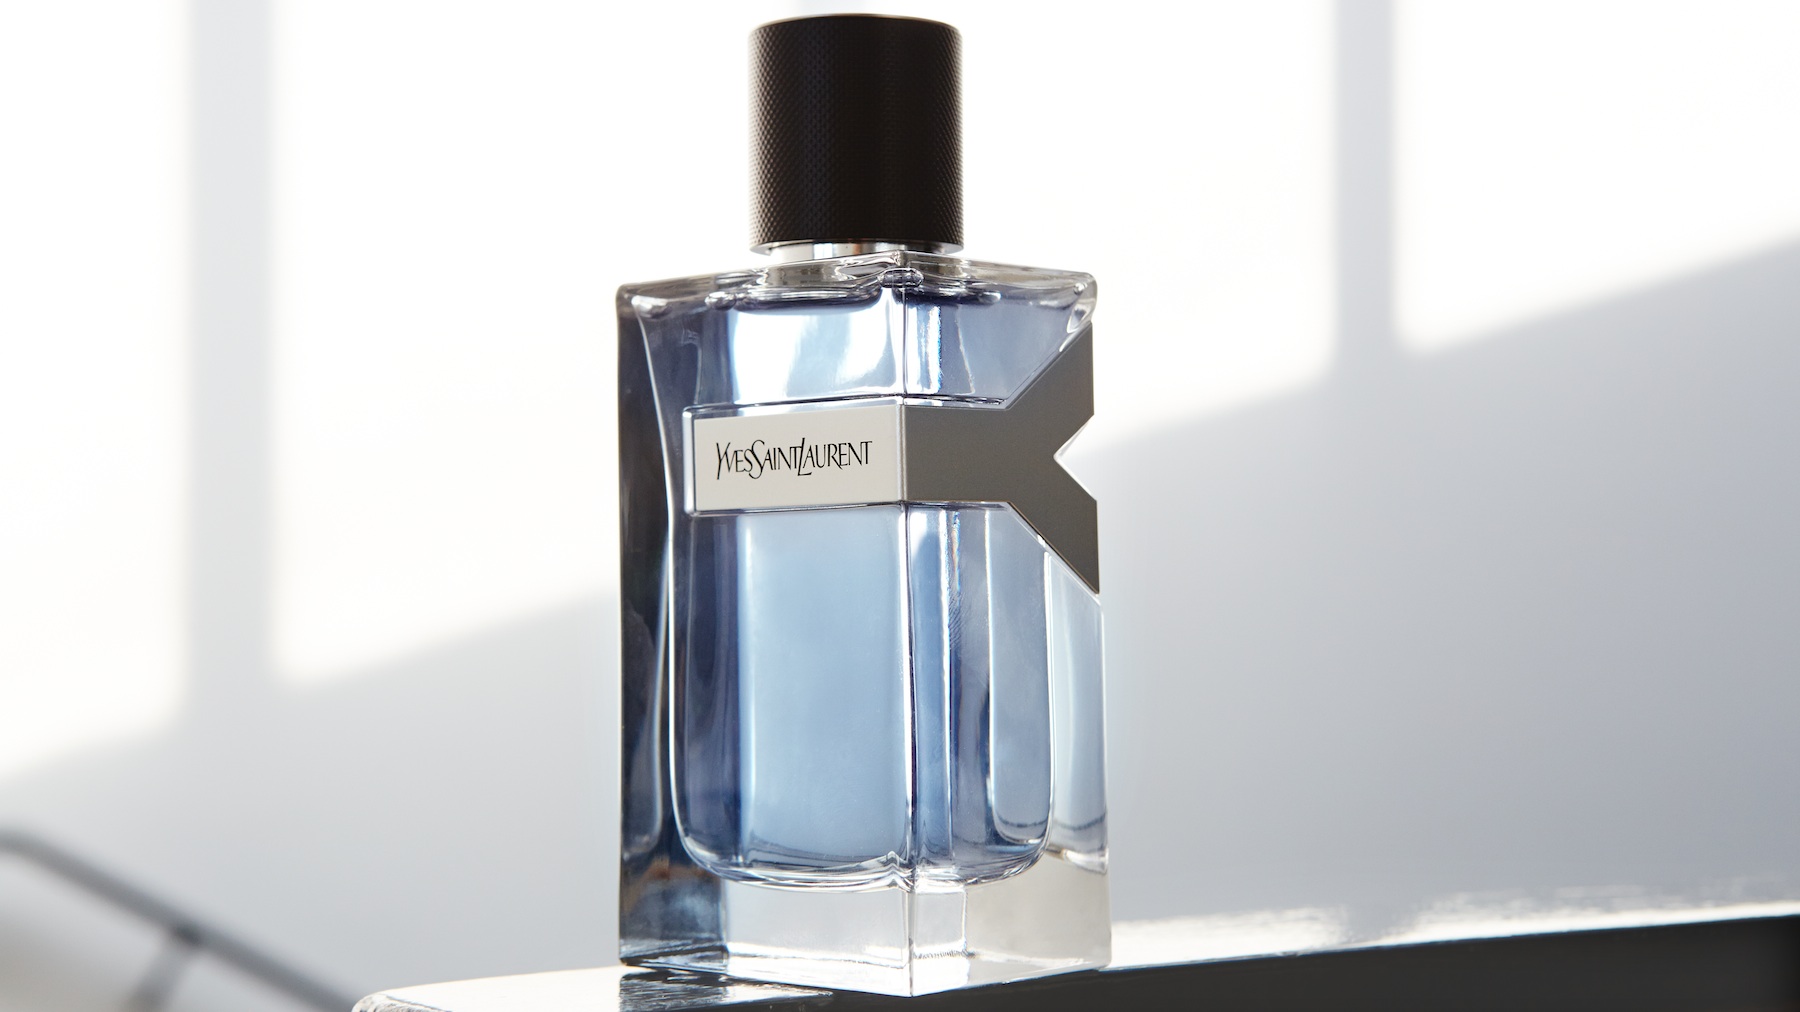 Yves Saint Laurent Y Yves Saint Laurent zapach - to nowe perfumy dla